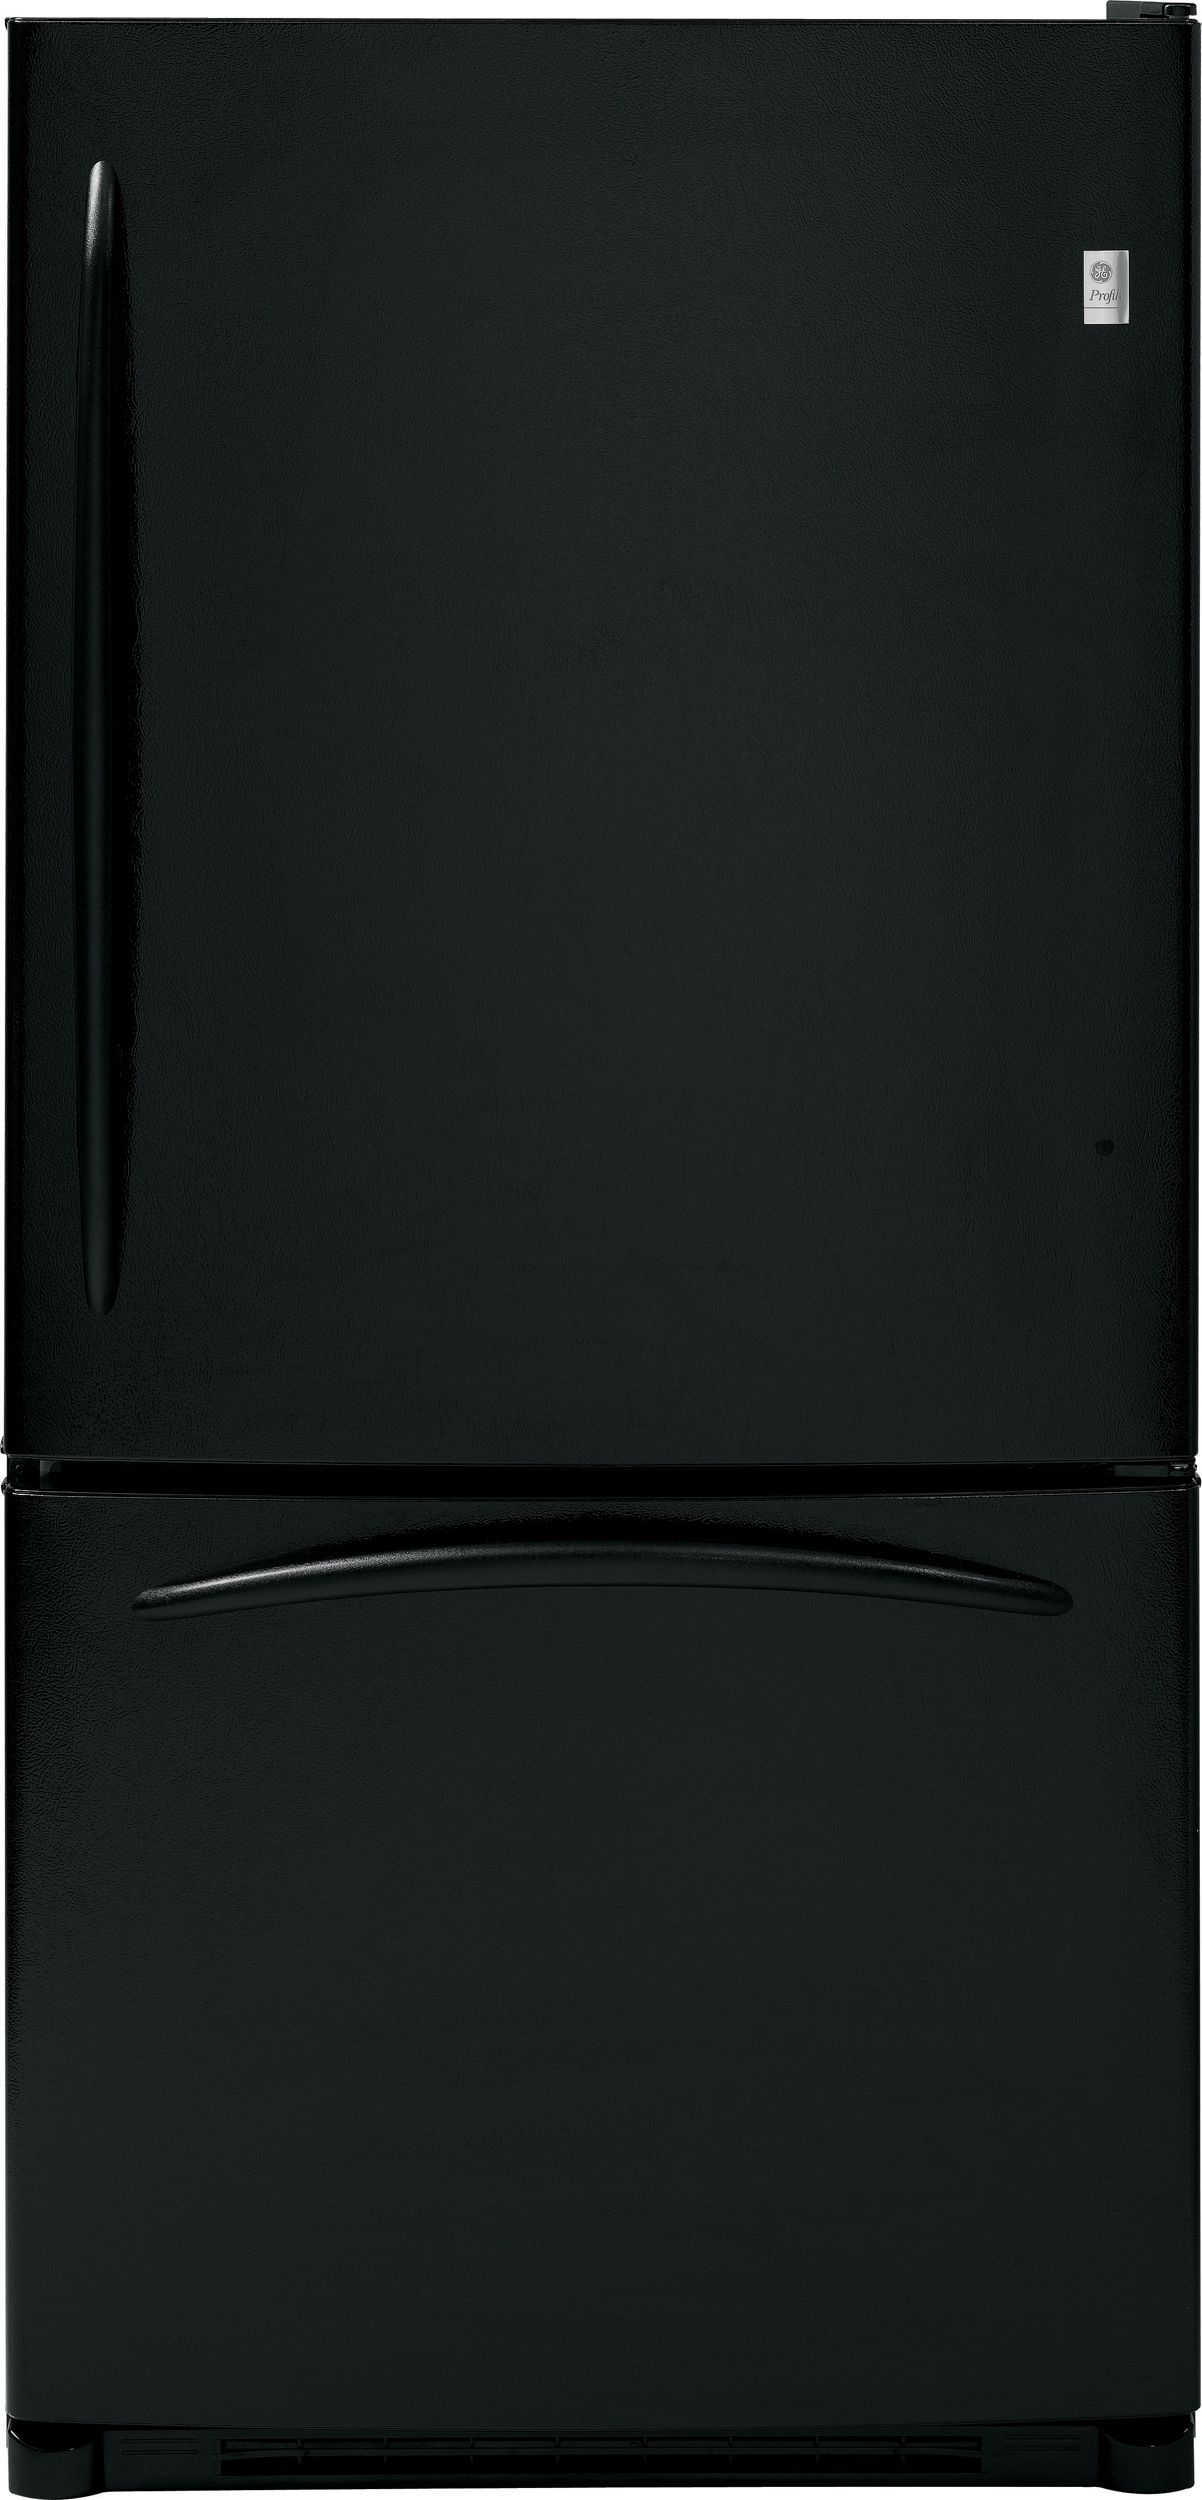 Refrigerator - S Series logo